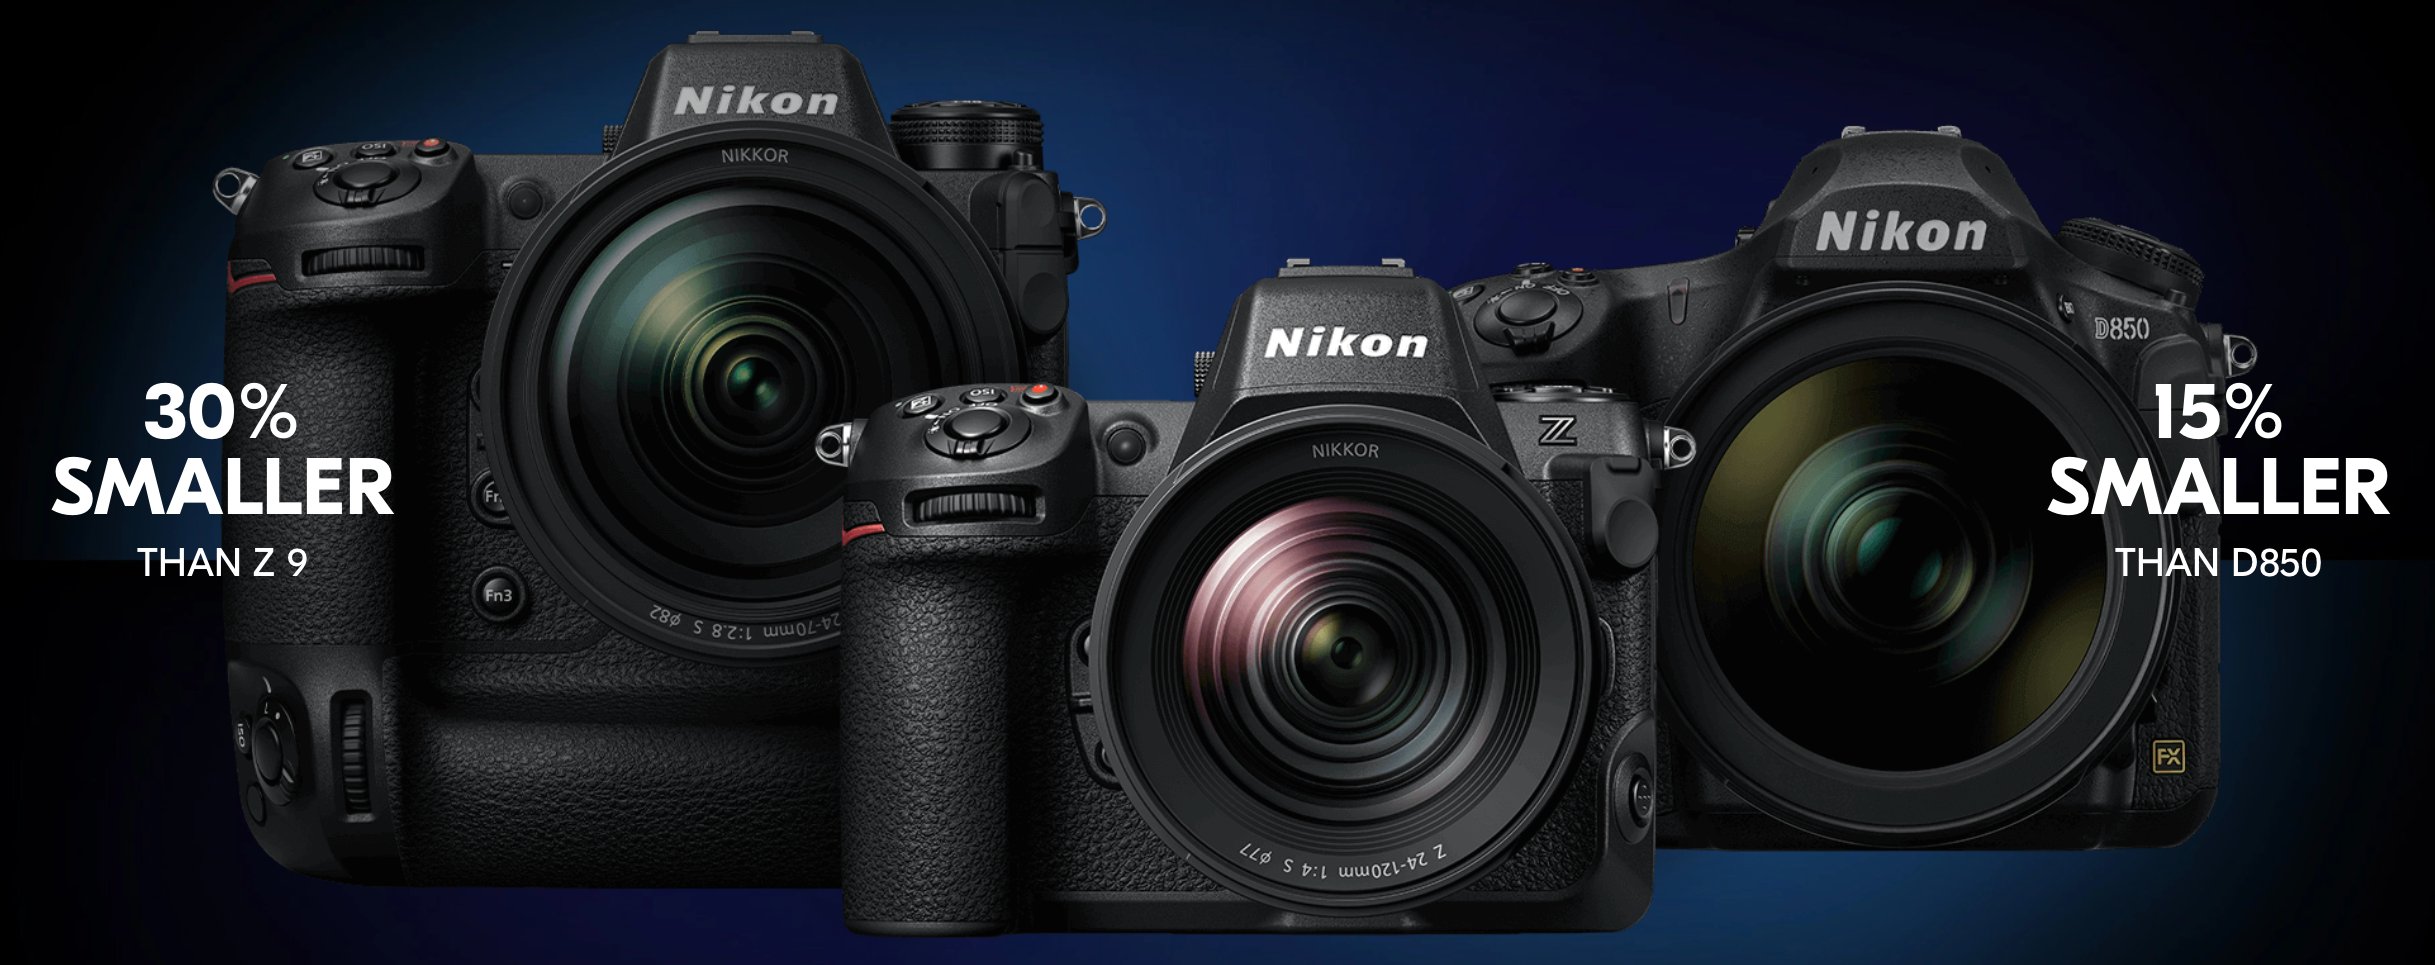 Nikon Z8 Mirrorless Camera with 24-120mm f/4 Lens - 1698